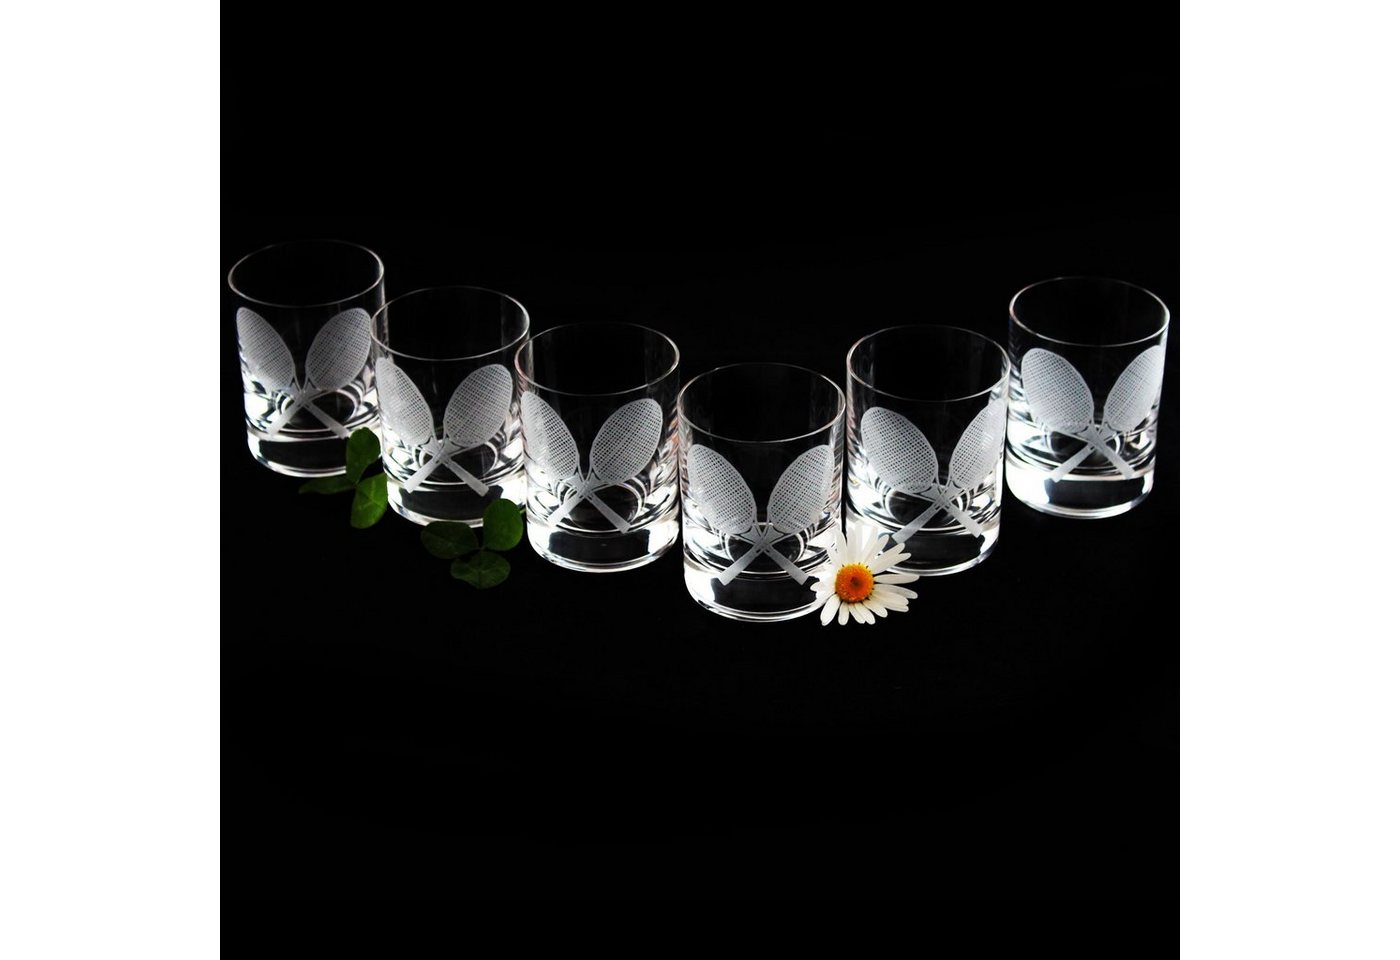 Bohemia Crystal Schnapsglas Barline, Kristallglas, veredelt mit Gravur, 6-teilig, Inhalt 60 ml, Schnapsglas-Set von Bohemia Crystal